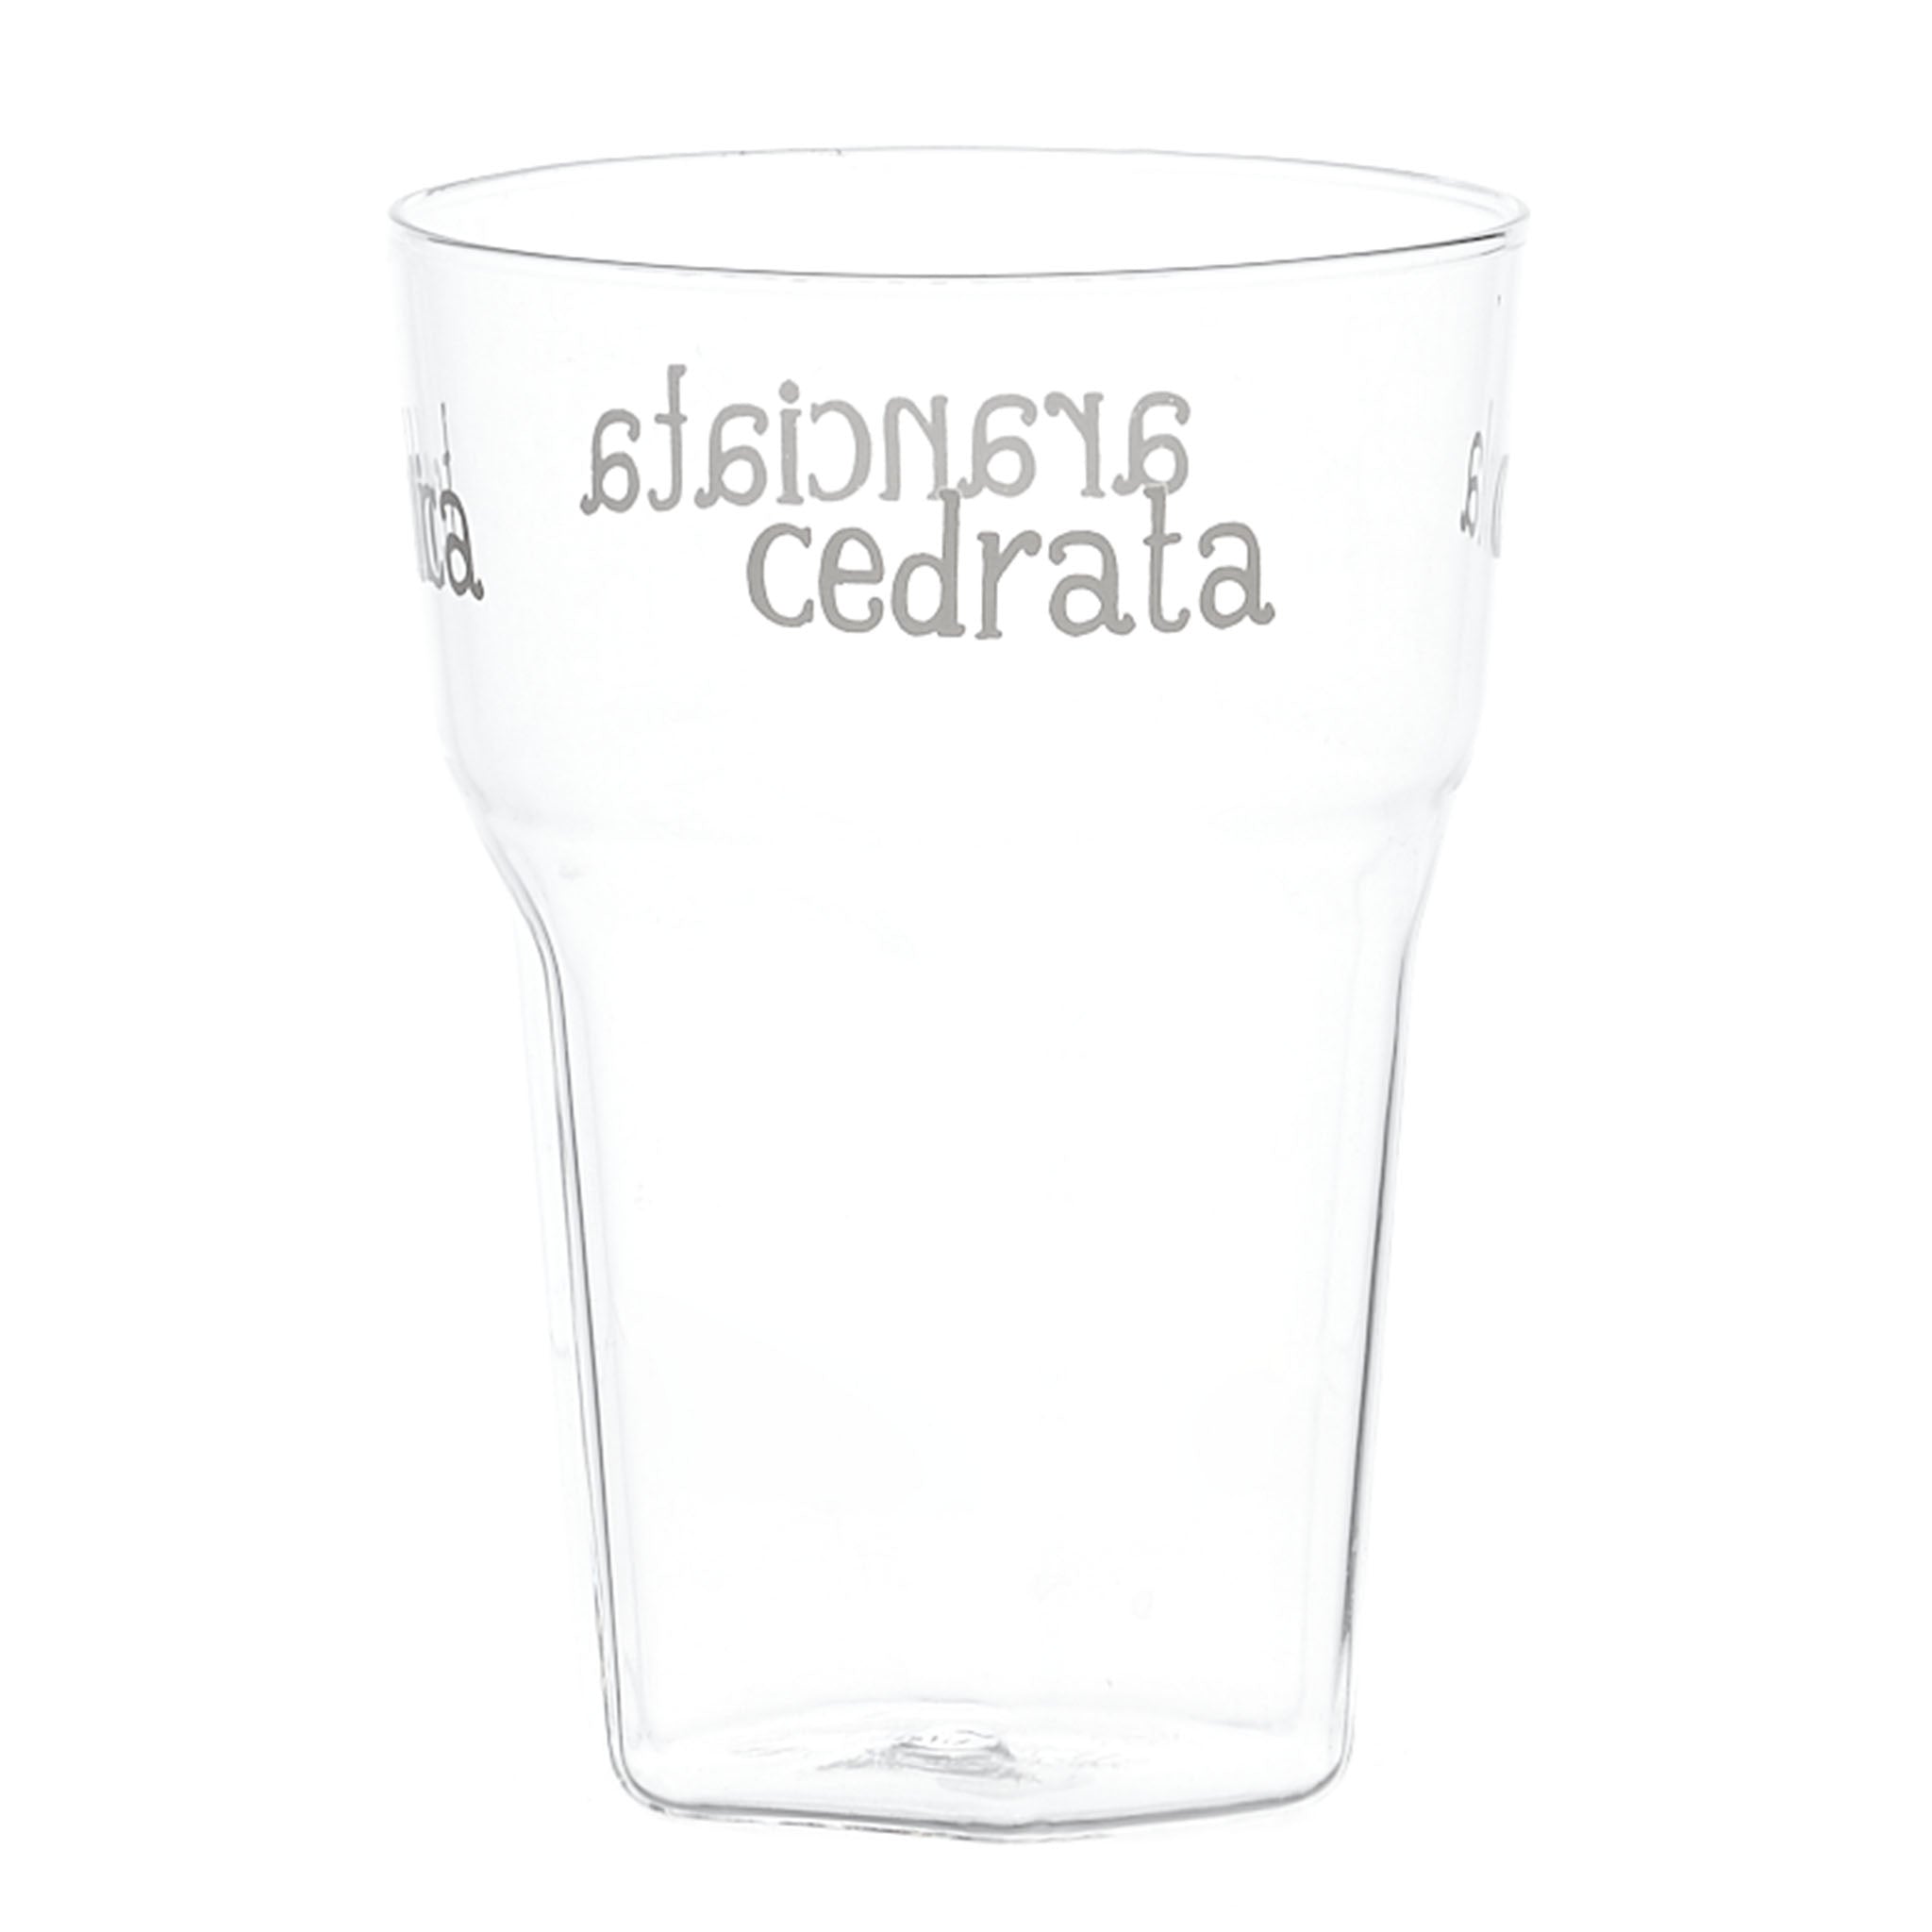 Cola Tonica Cedrata Aranciata Glass - Set of 2